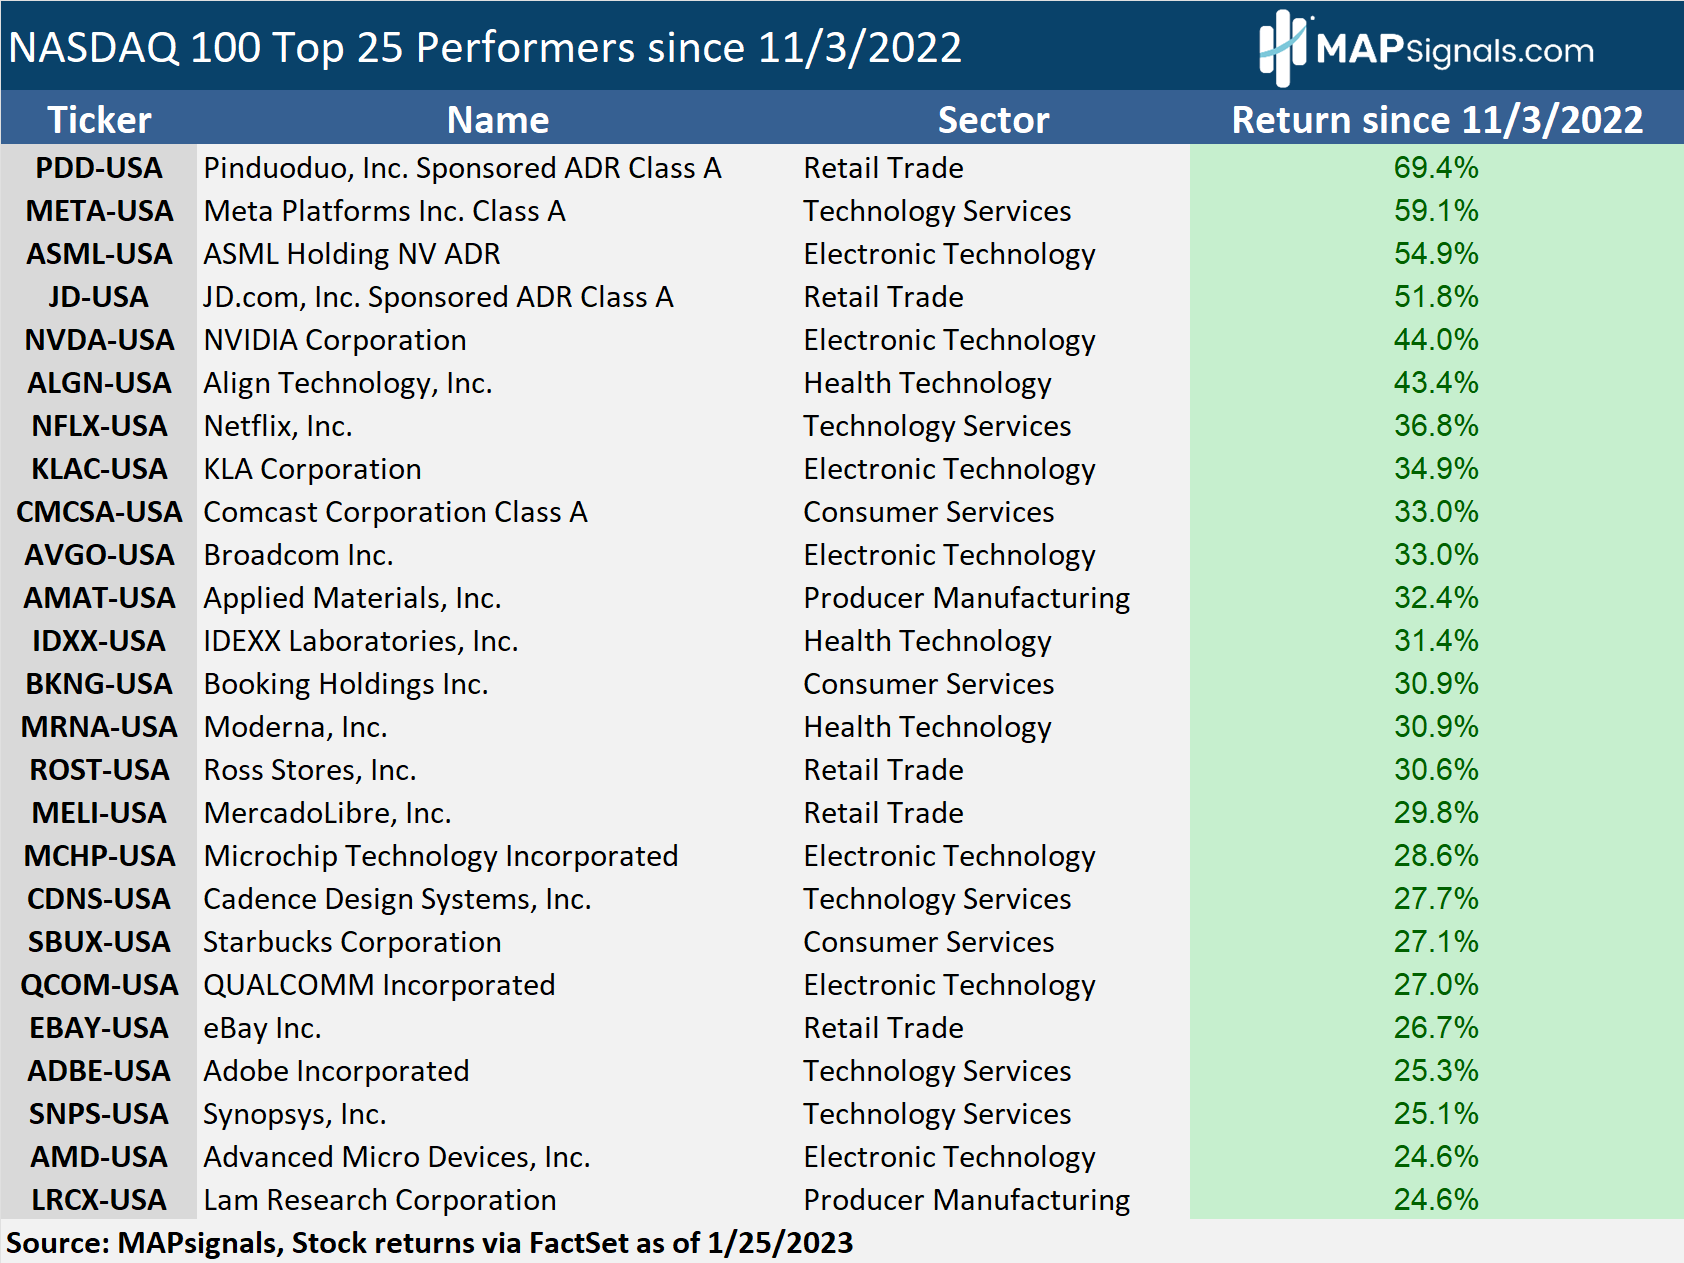 NASDAQ 100 Top 25 performers since 11-3-22 | MAPsignals